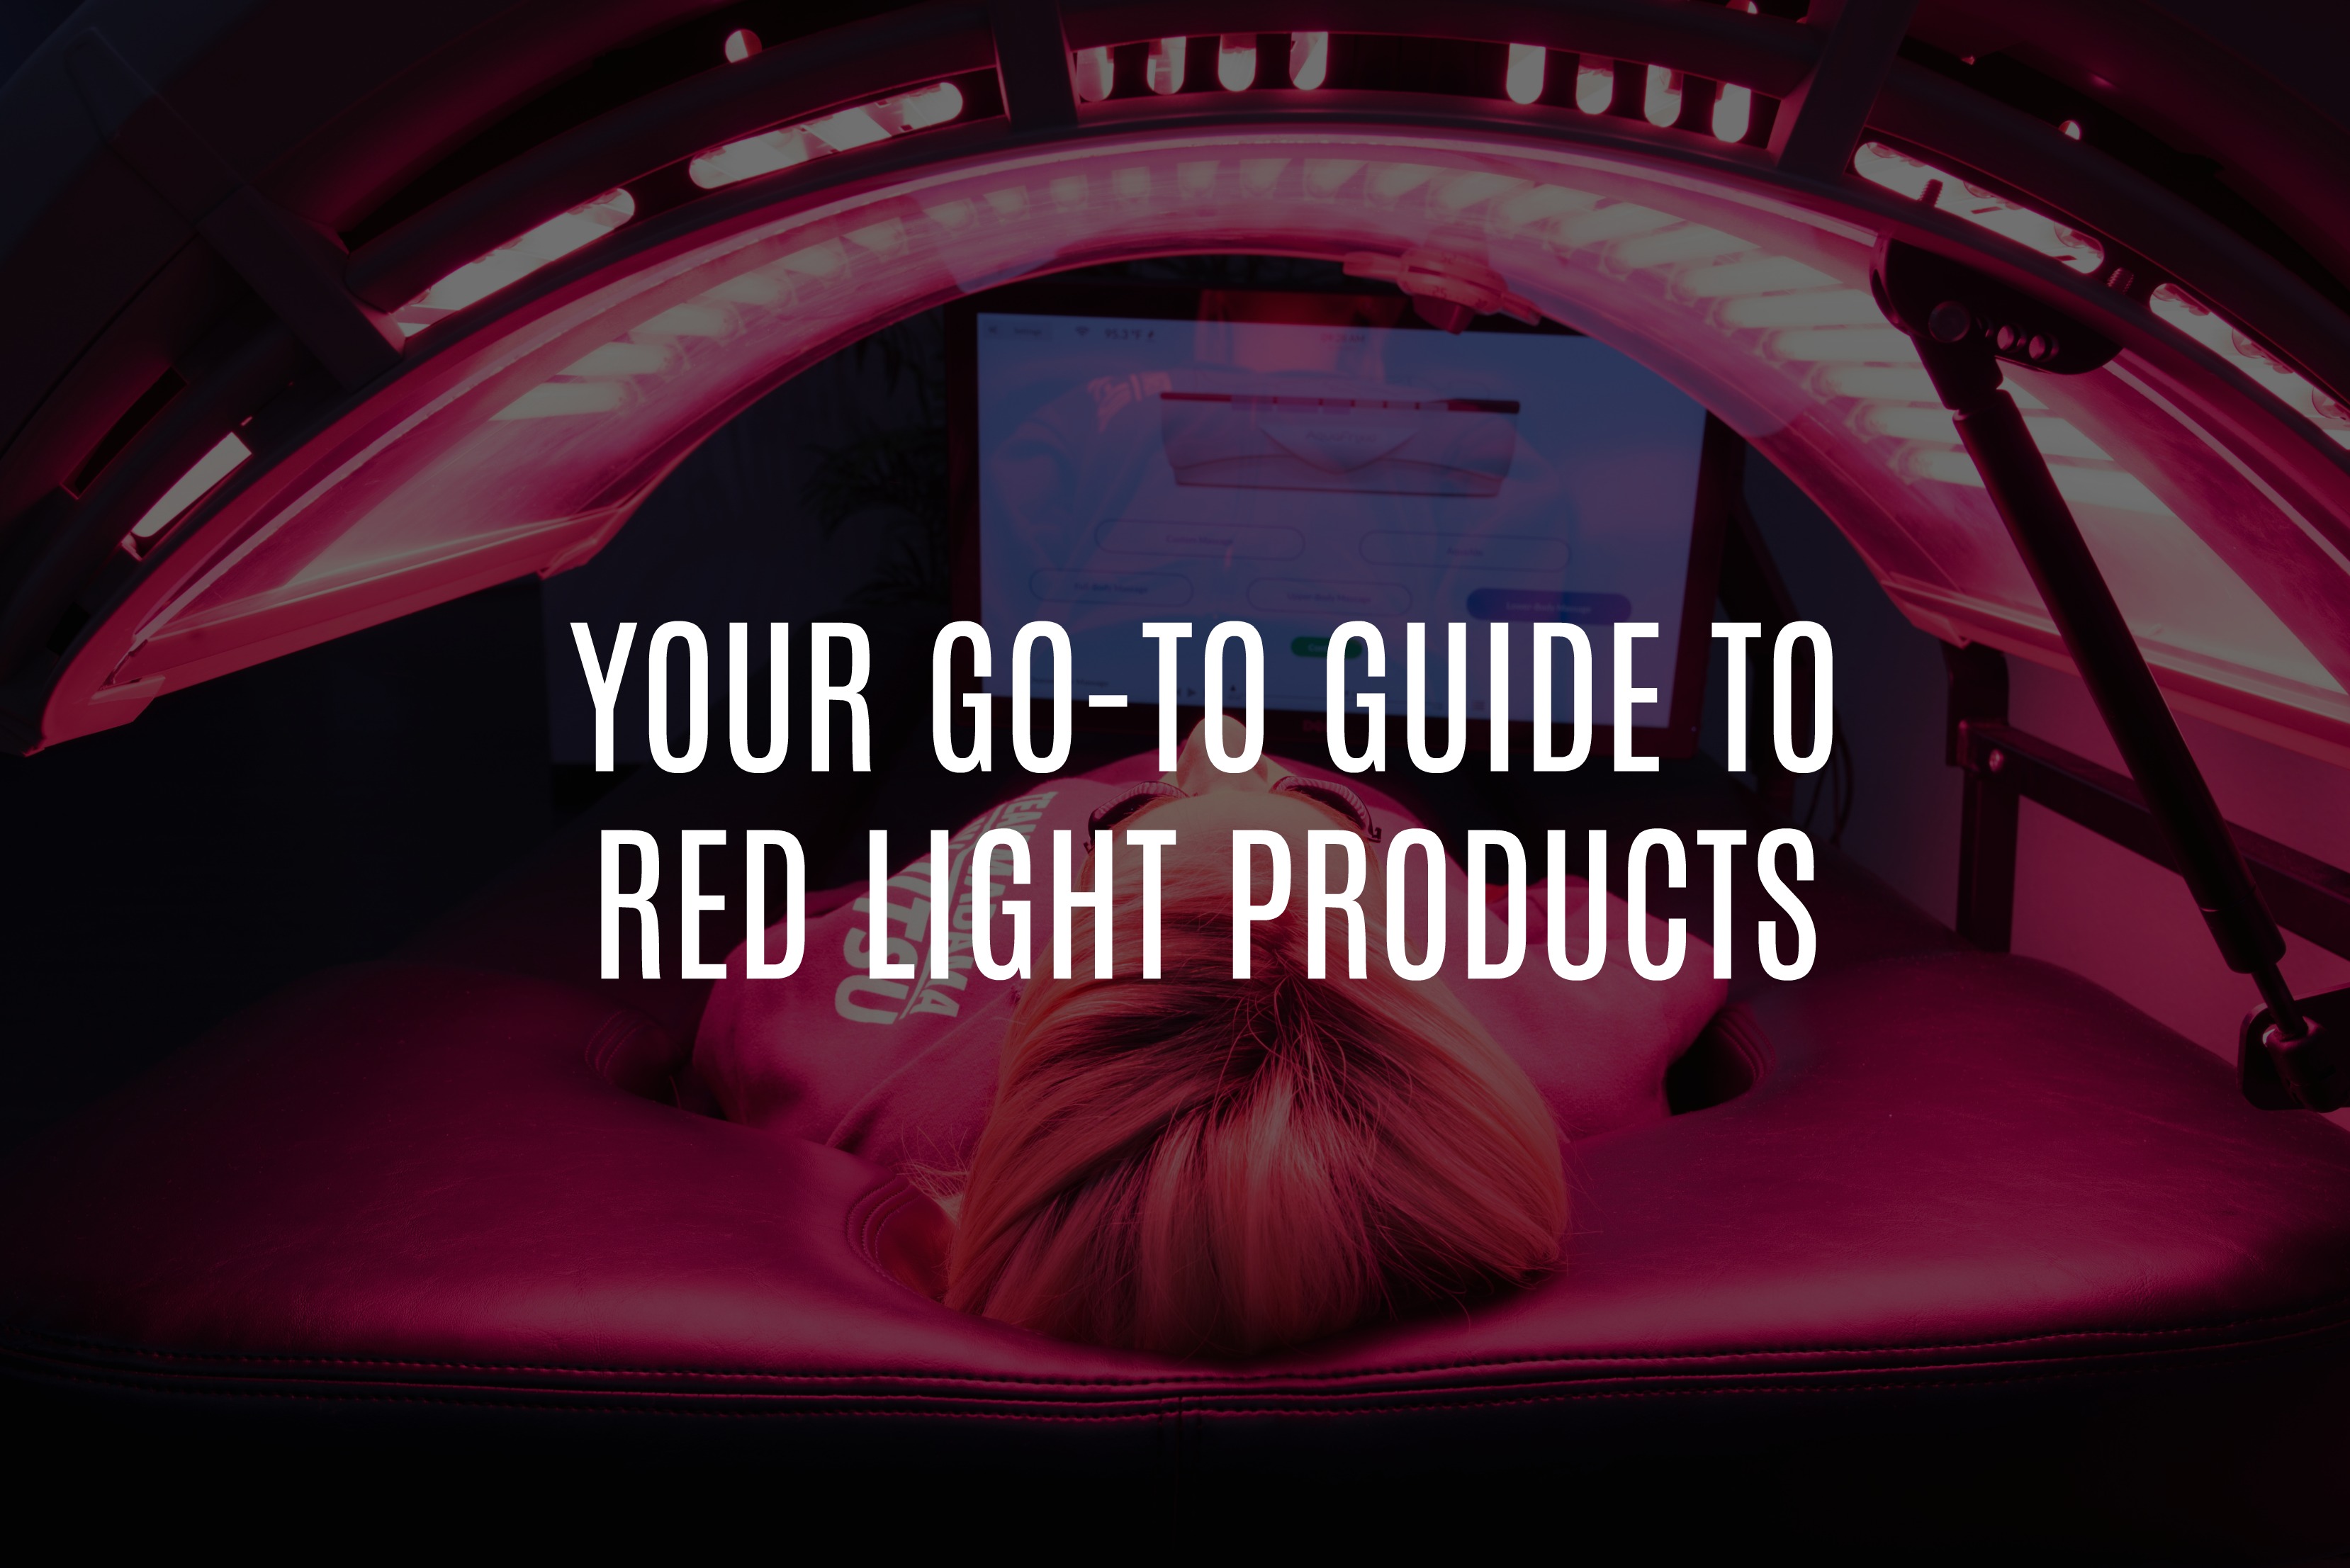 RenuvaSkin S4800 Red Light Booth, Red Light